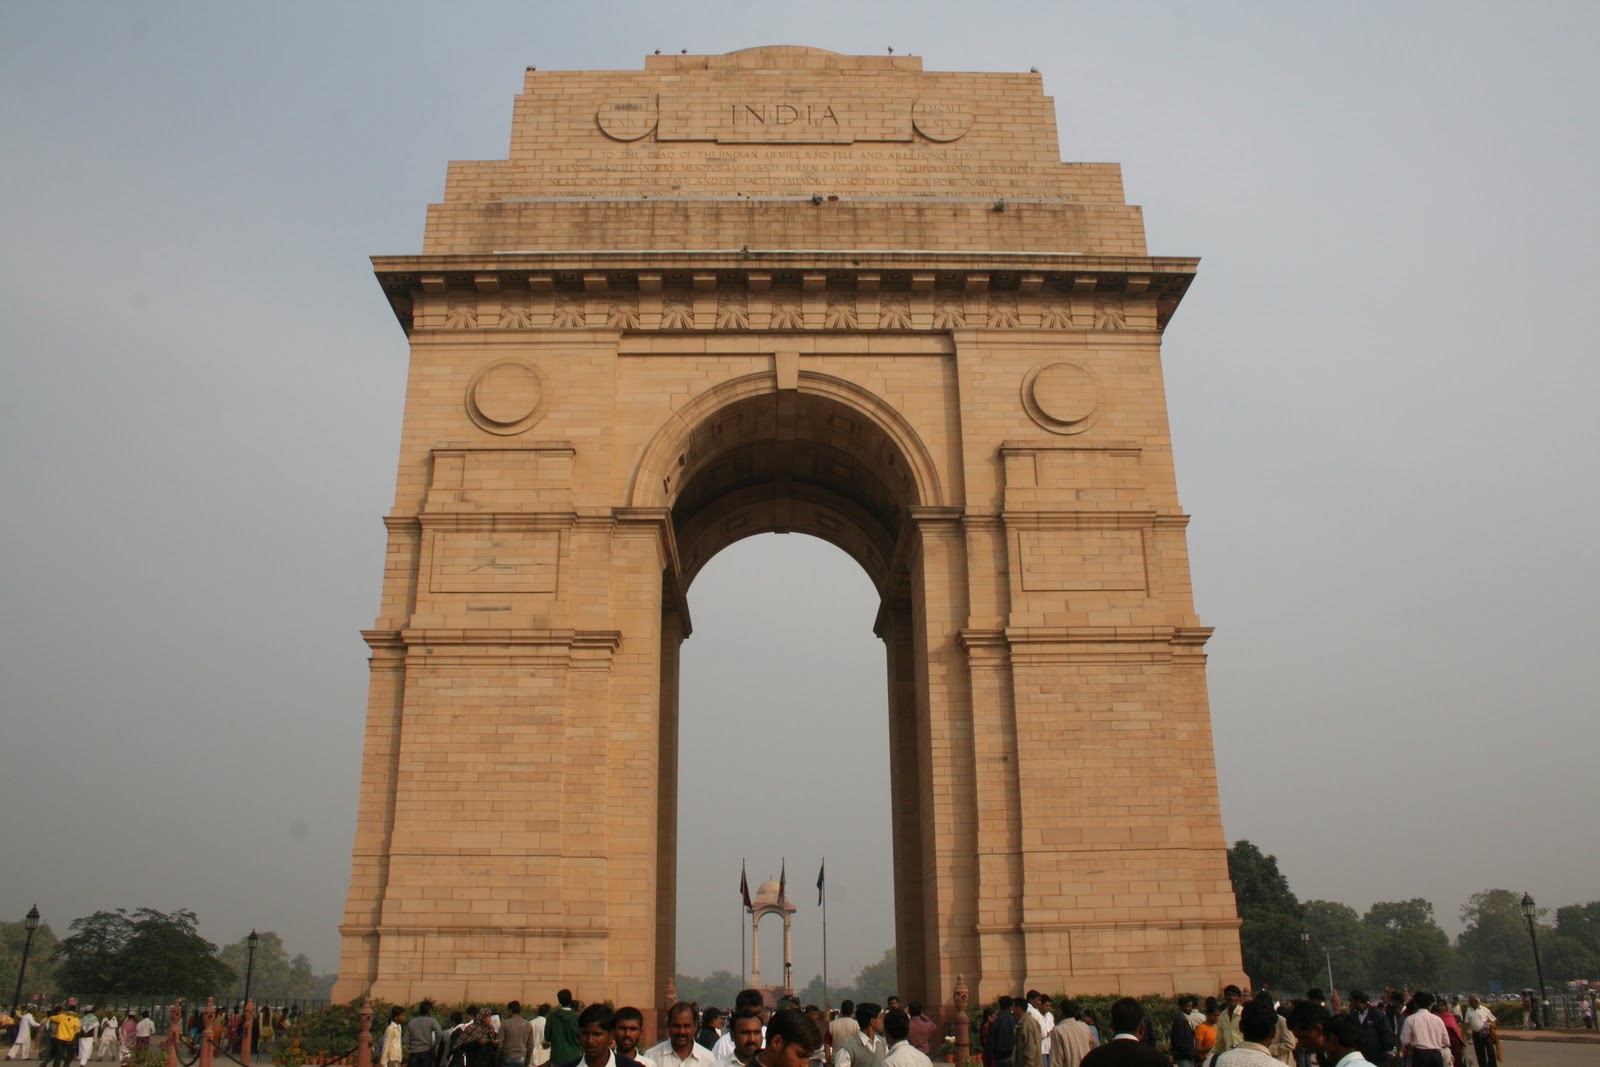 https://blogger.googleusercontent.com/img/b/R29vZ2xl/AVvXsEjk5nqaRBR7ZpM5eoREgoe9xiZGO0WBds3eu62OMjanDoFZLlUaVzsTJc0eoF9OTQtvue3Hi5tLGOzFi4kP4nb0guVq4pHdzrfi5c8TETyQZGkhVEVSBC4XaTXDMbZfX3K7Juof_hSarv9D/s1600/India+Gate++Delhi+Psuperos.JPG